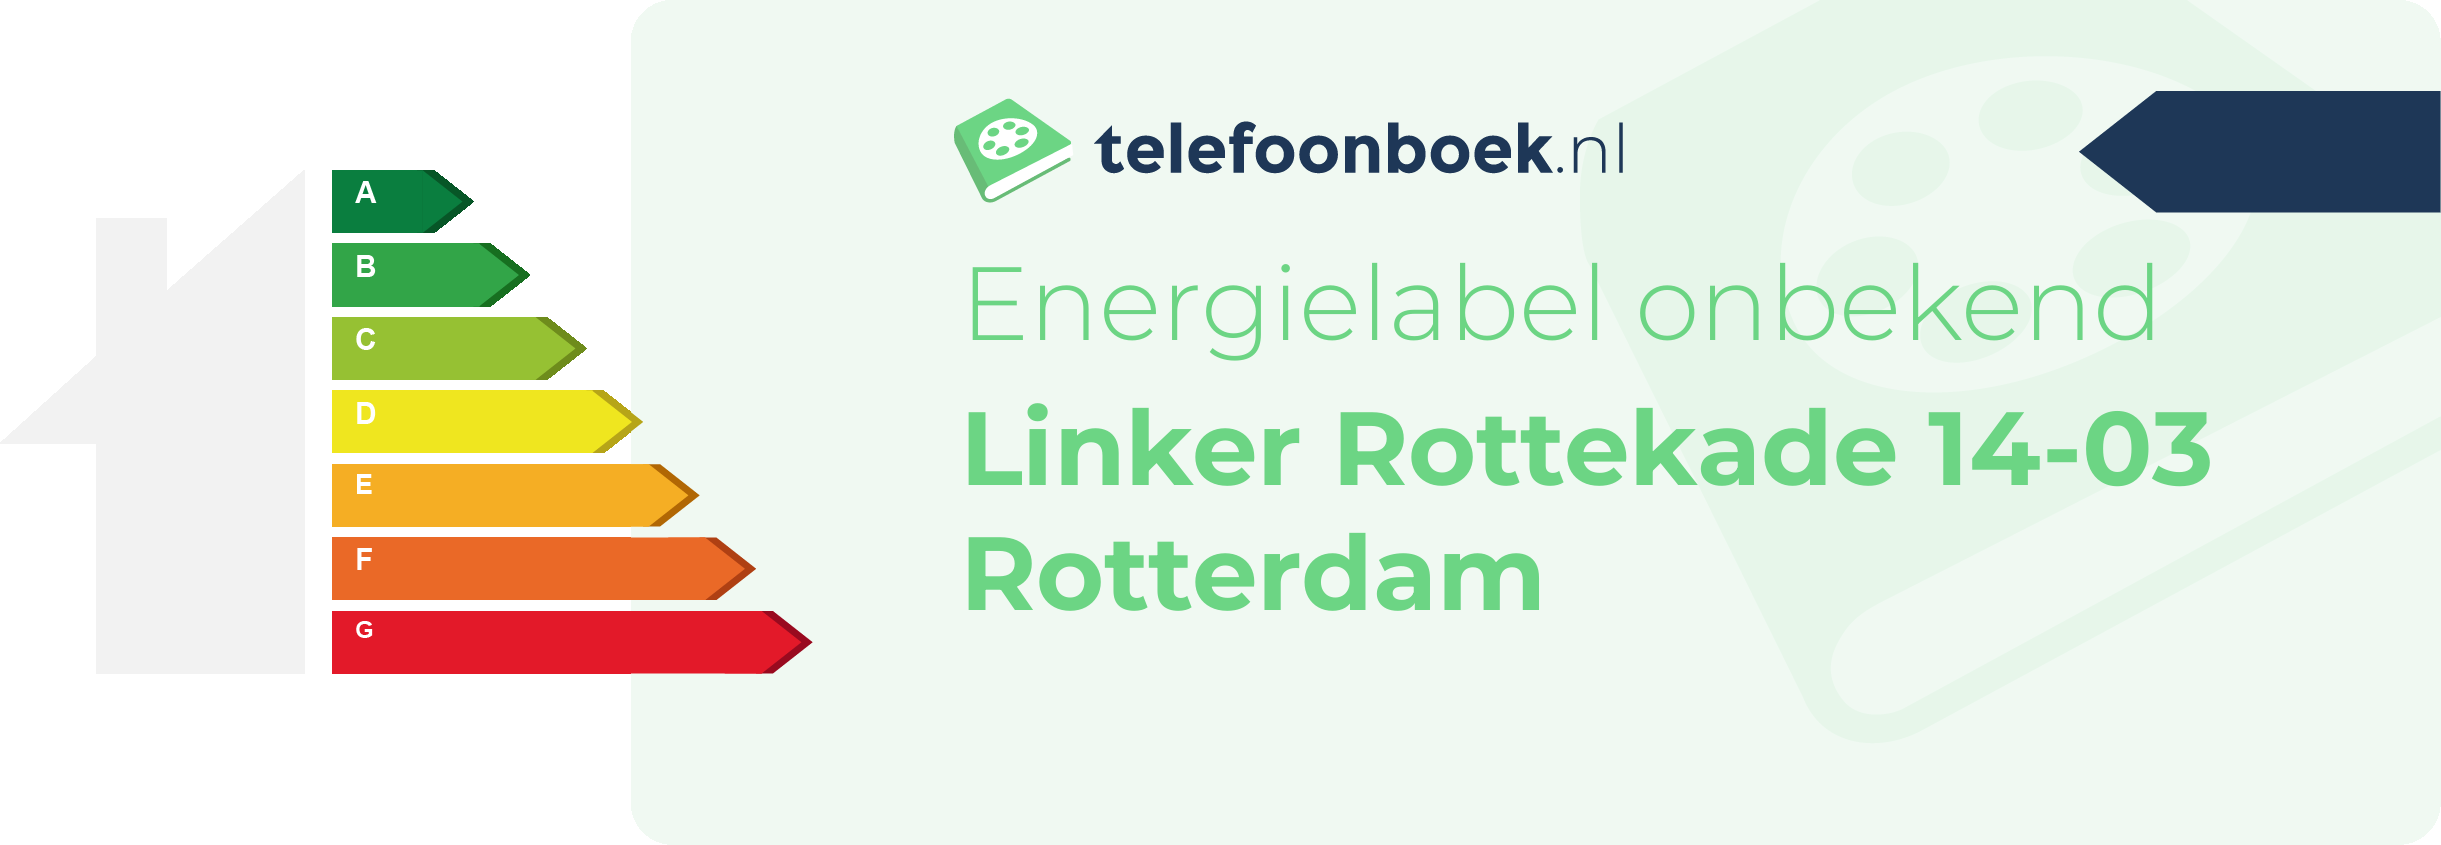 Energielabel Linker Rottekade 14-03 Rotterdam